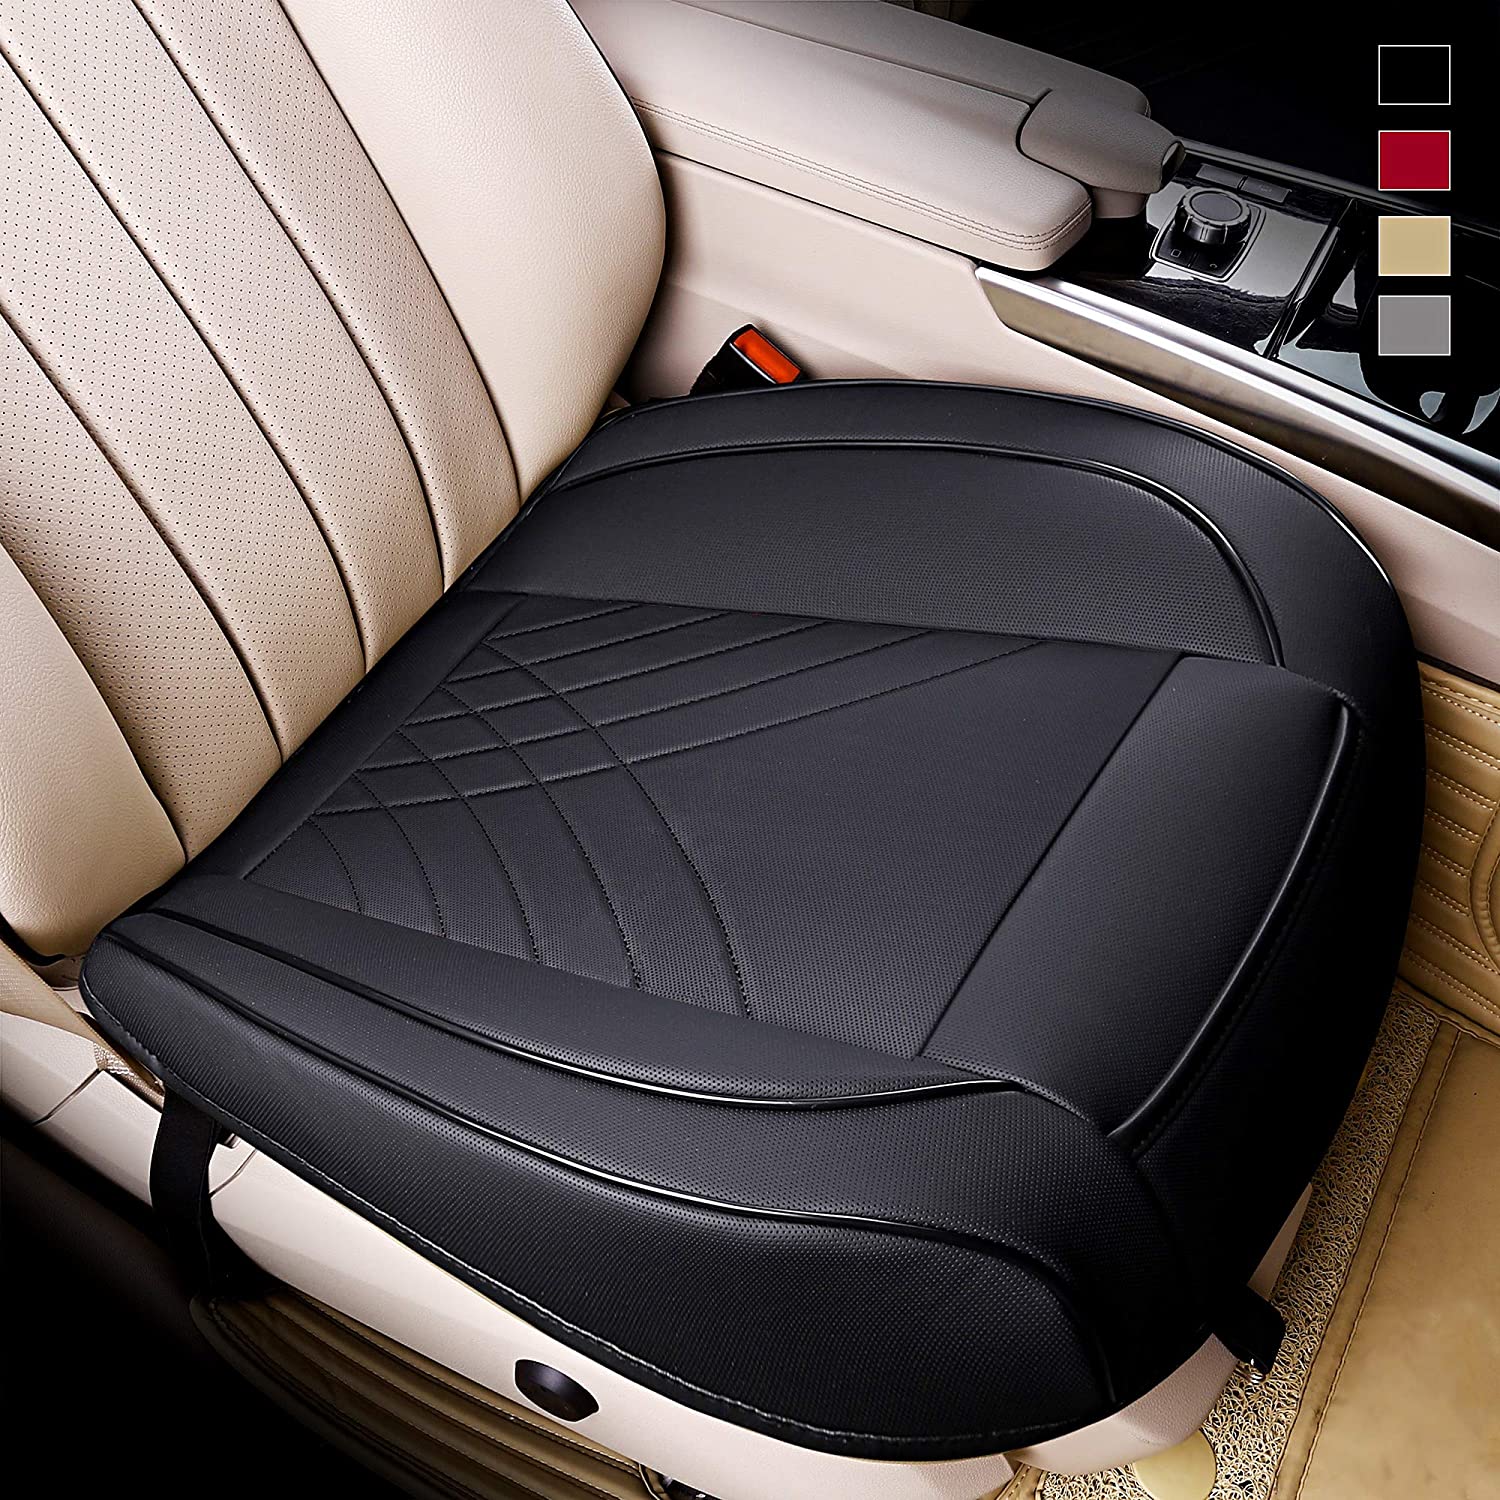 kingphenix Car Seat Cushion with 1.2inch Comfort Memory Foam